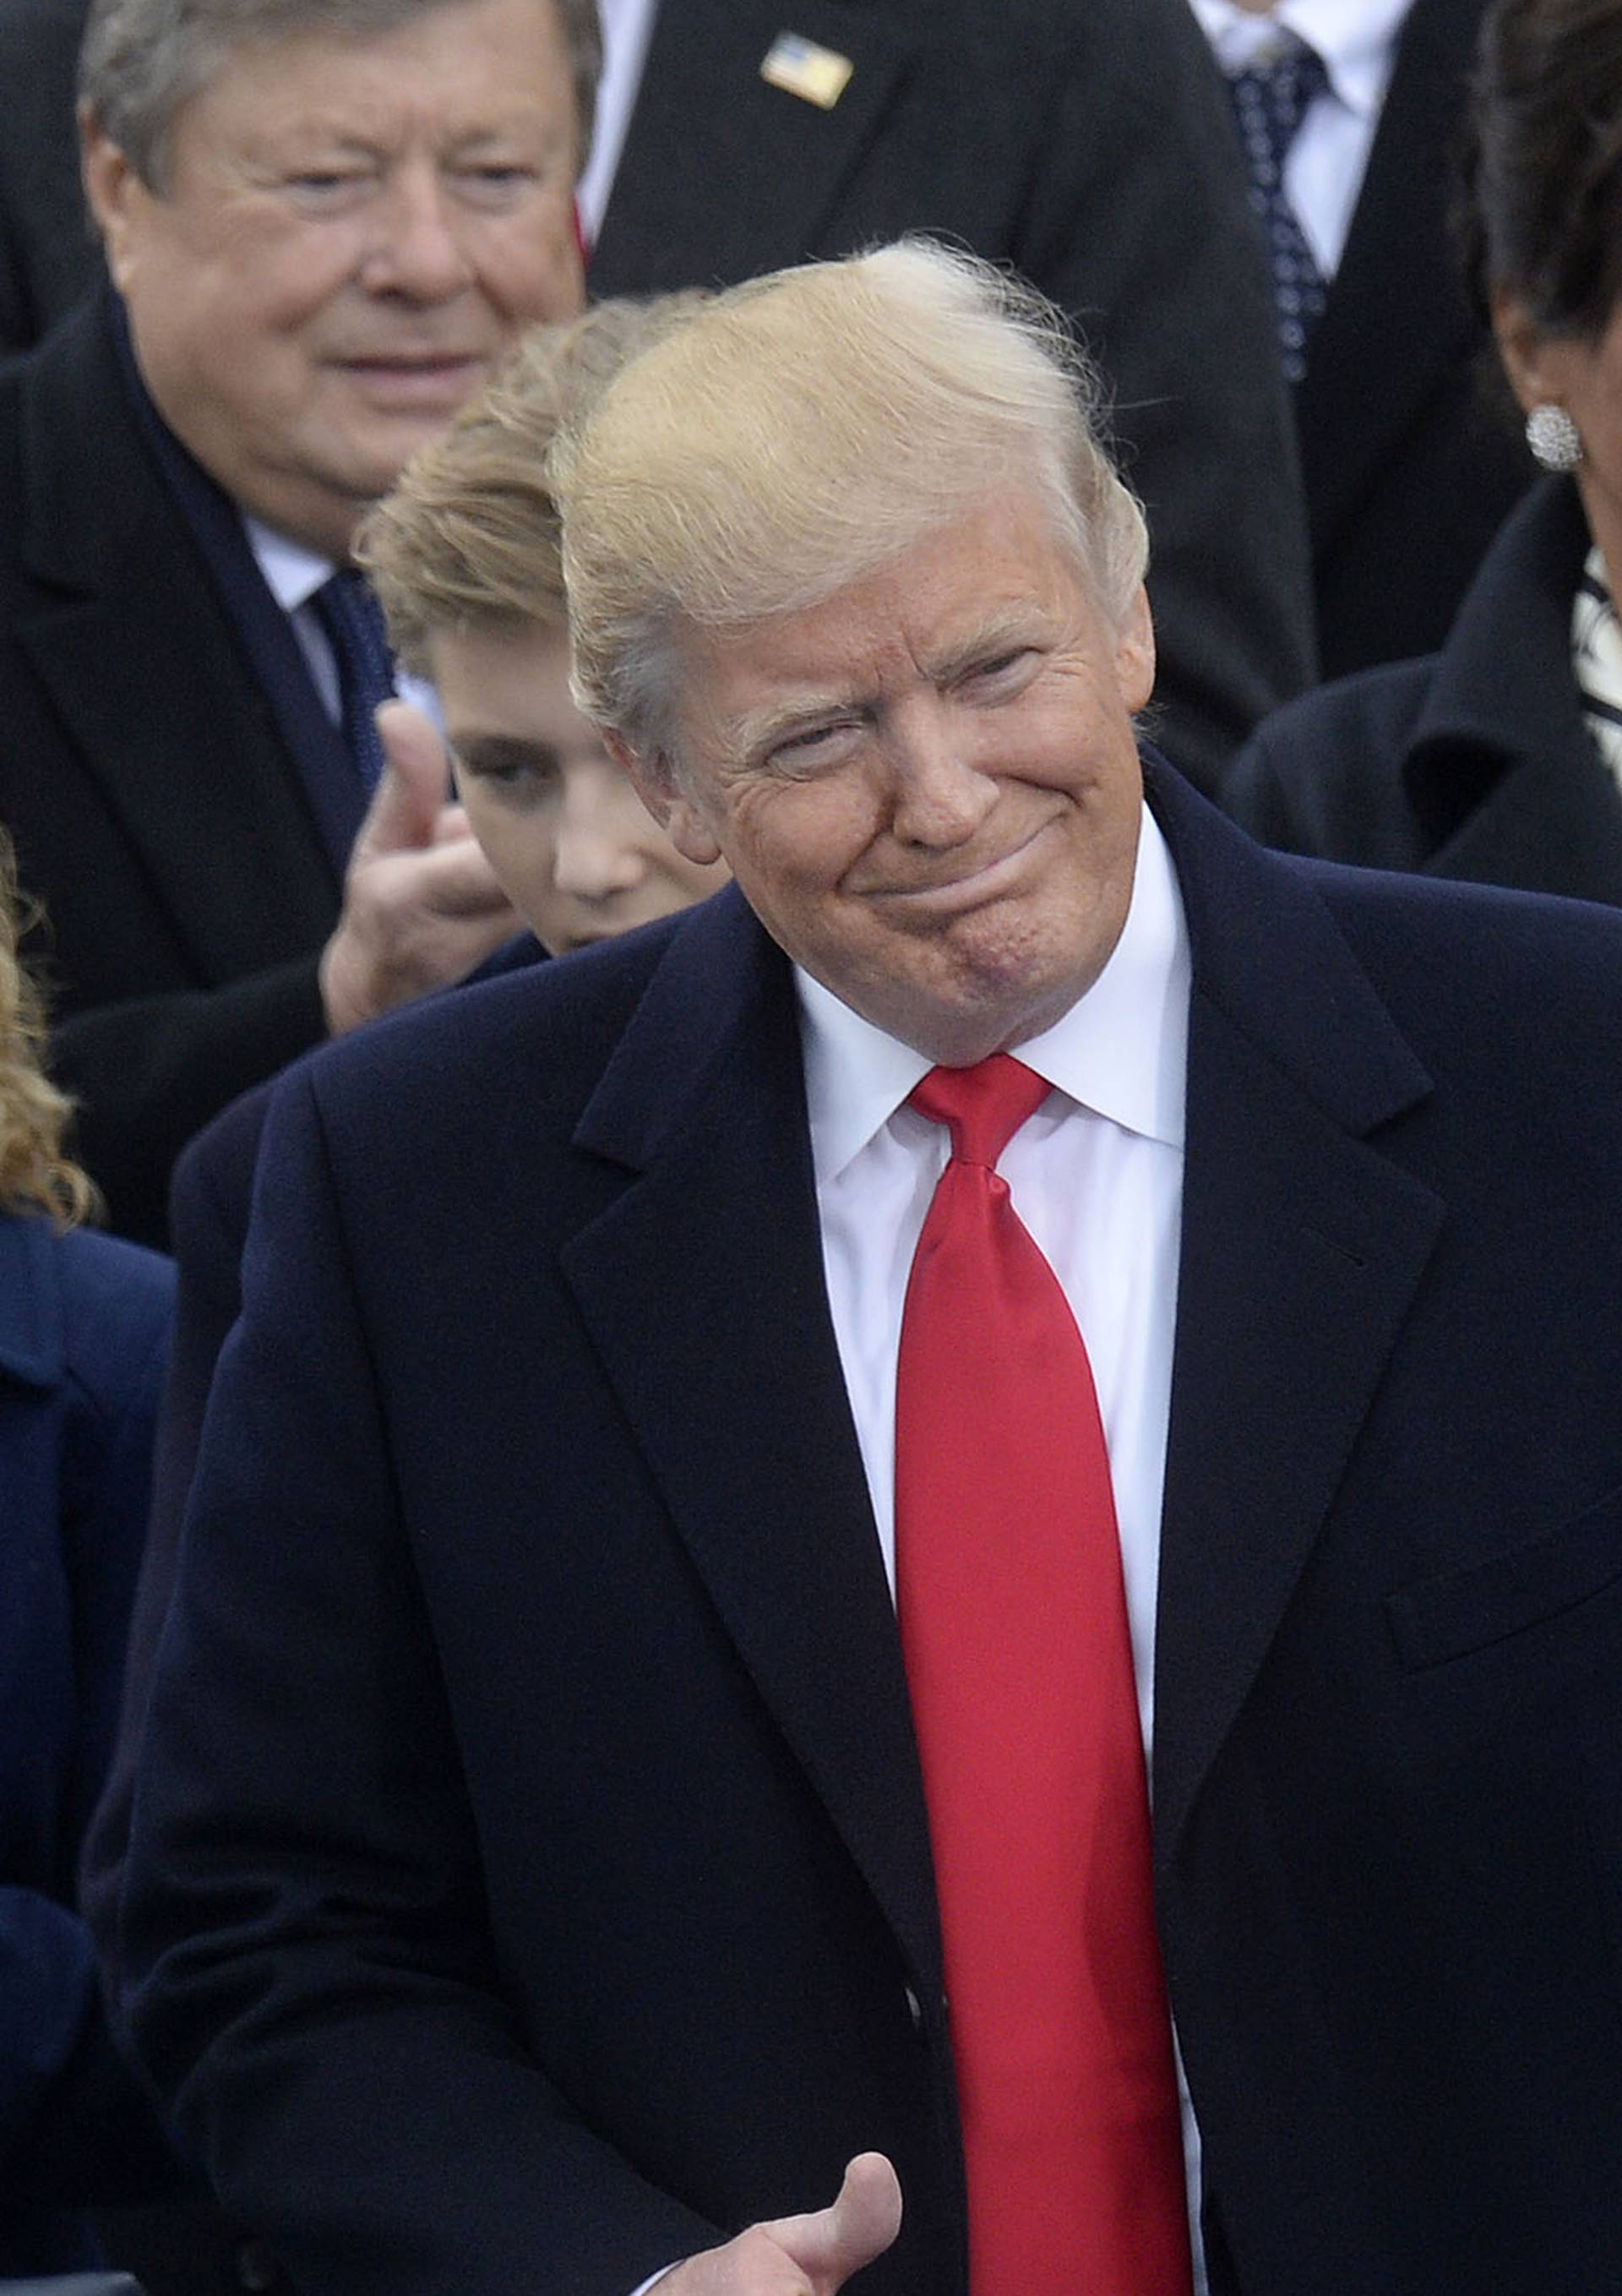 Donald Trump Sworn In As U.S. President - DC